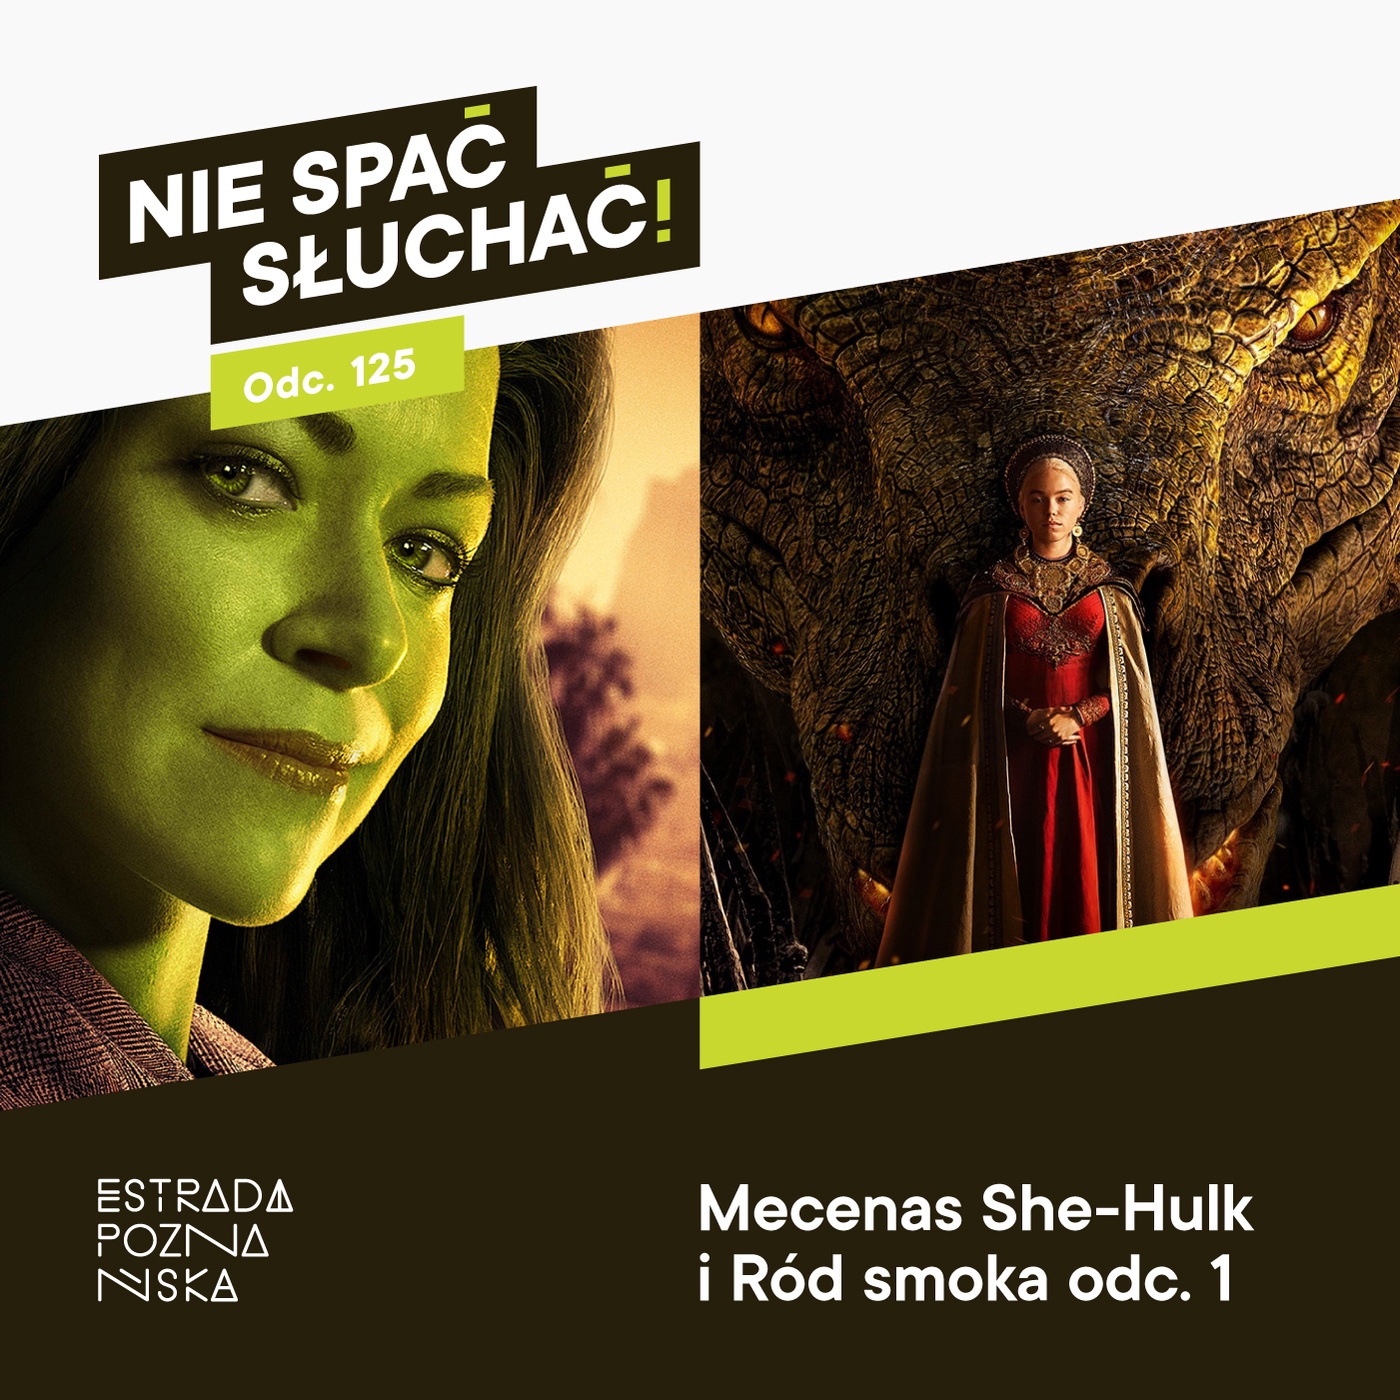 Mecenas She-Hulk i Ród smoka odc. 1